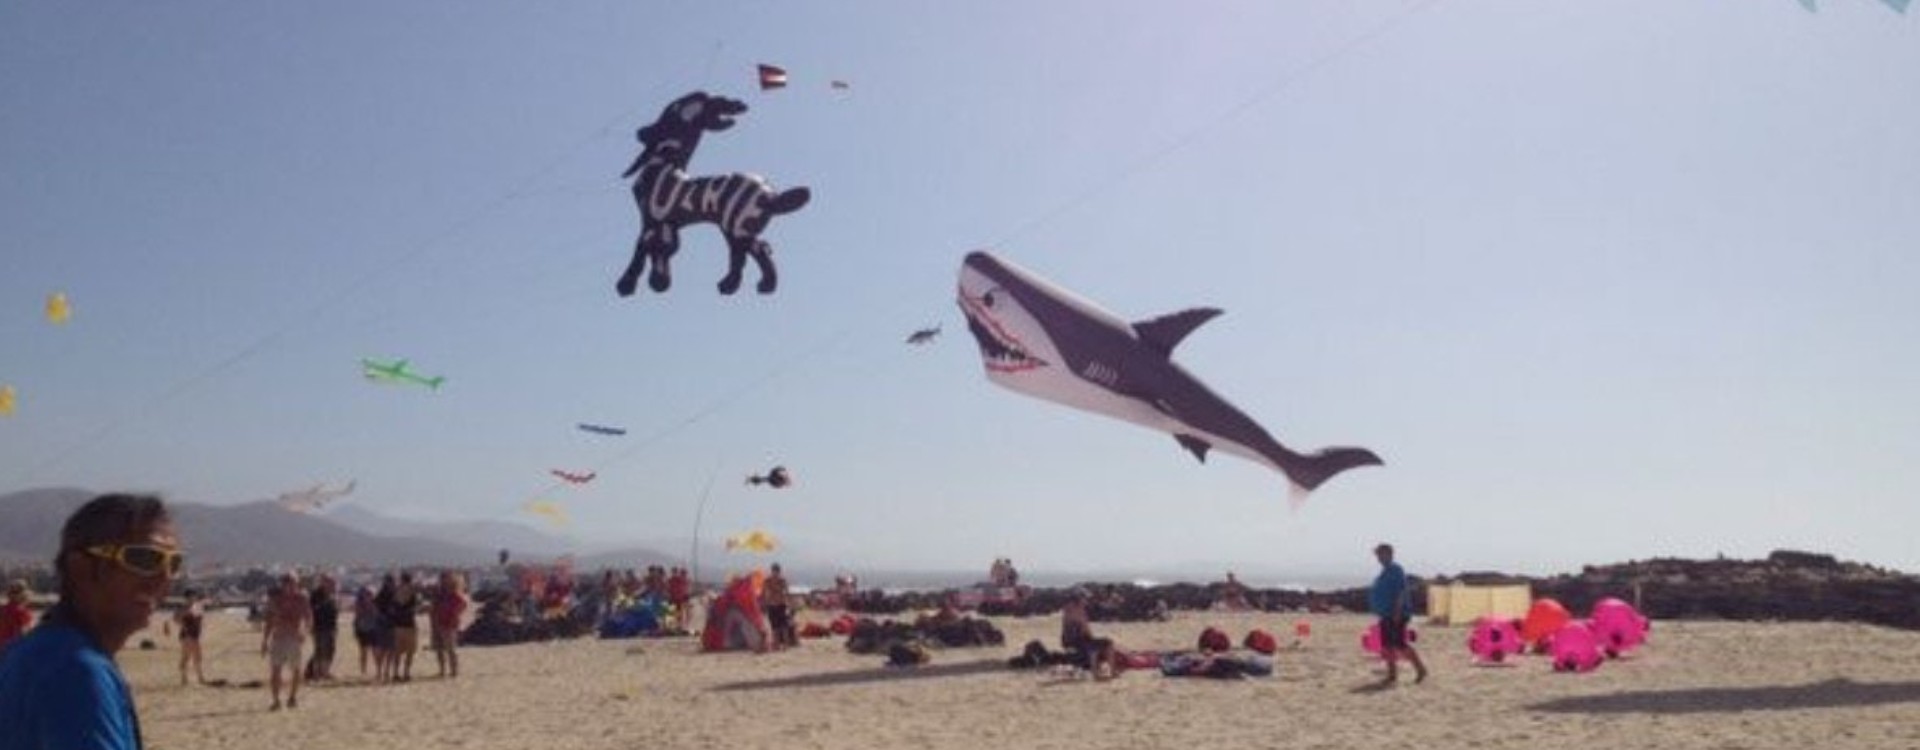 international kite festivals fuertaventura